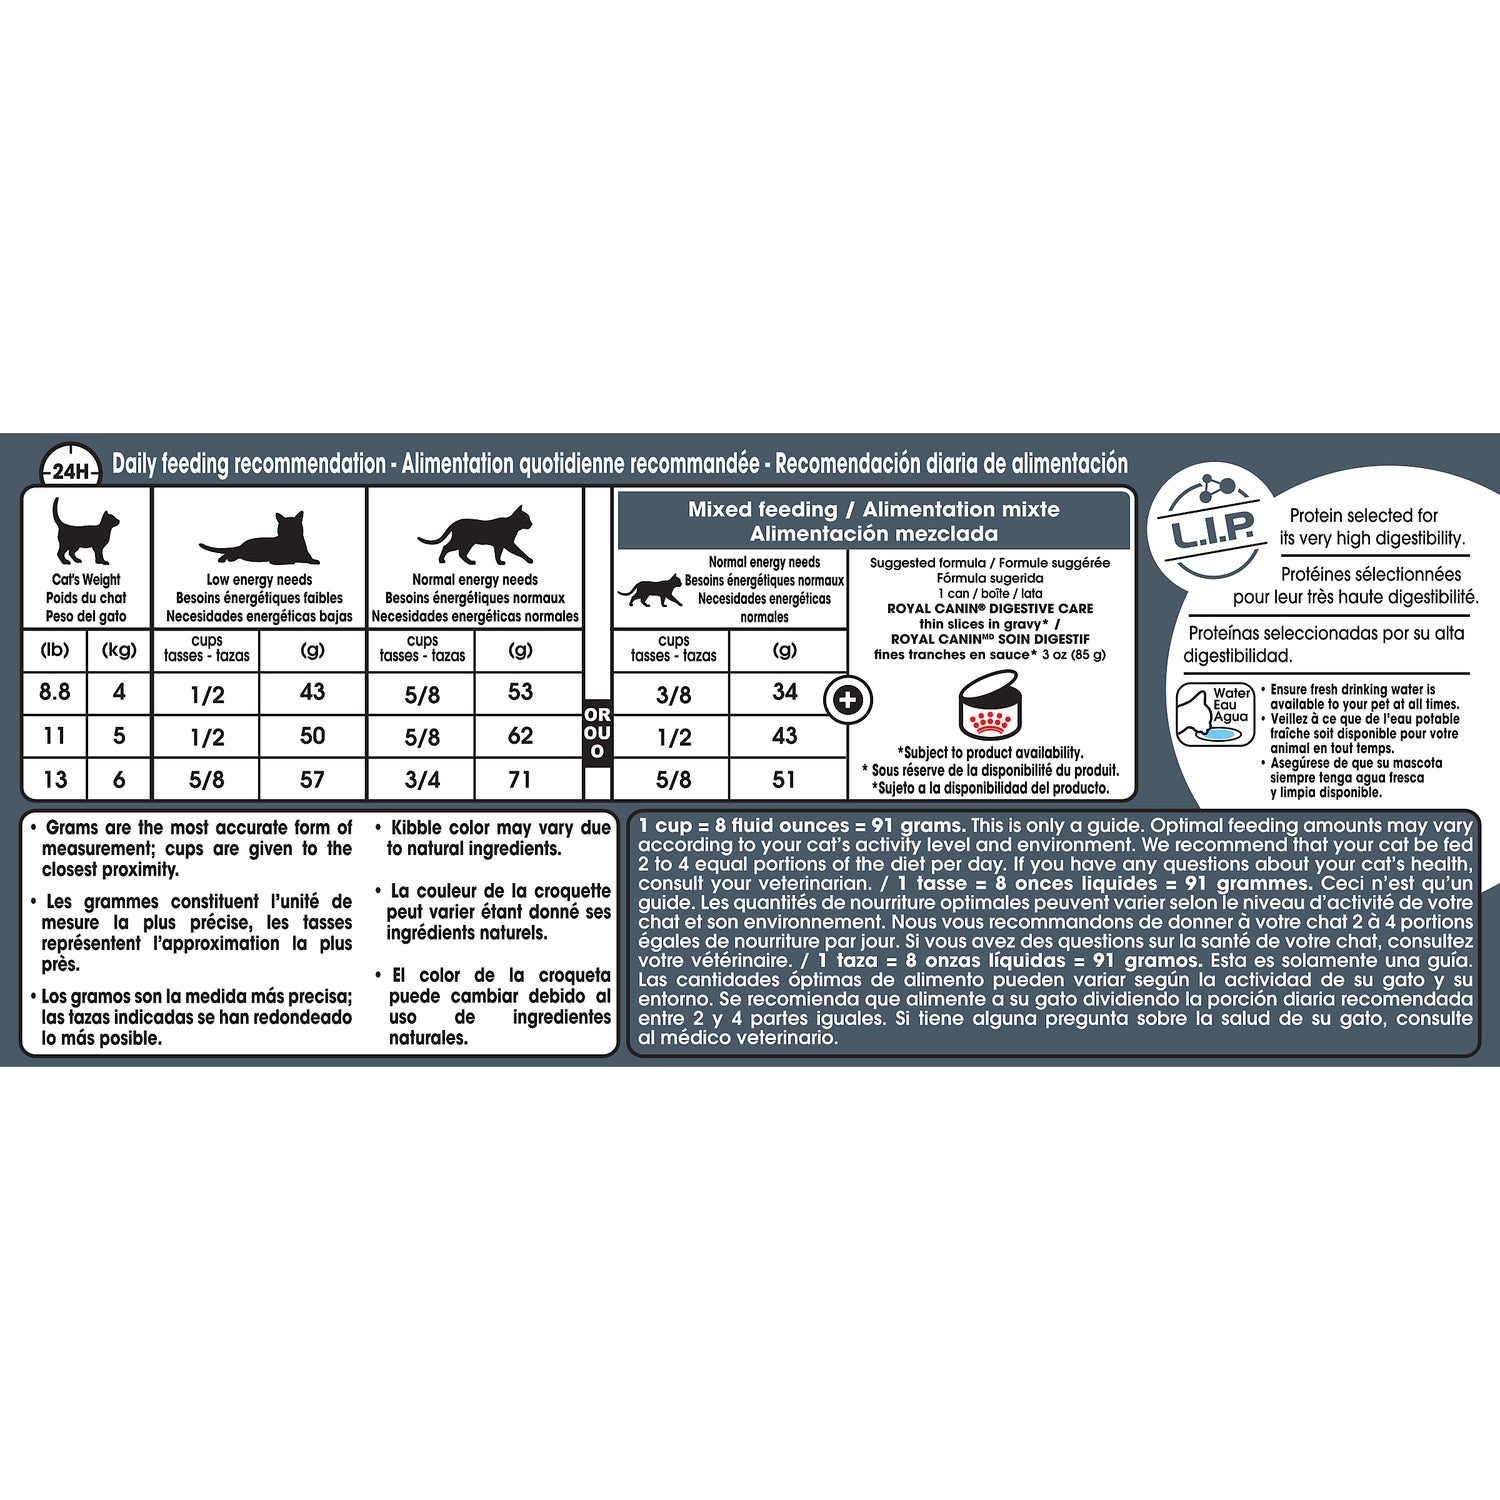 Royal Canin® Feline Care Nutrition™ Digestive Care Adult Dry Cat Food